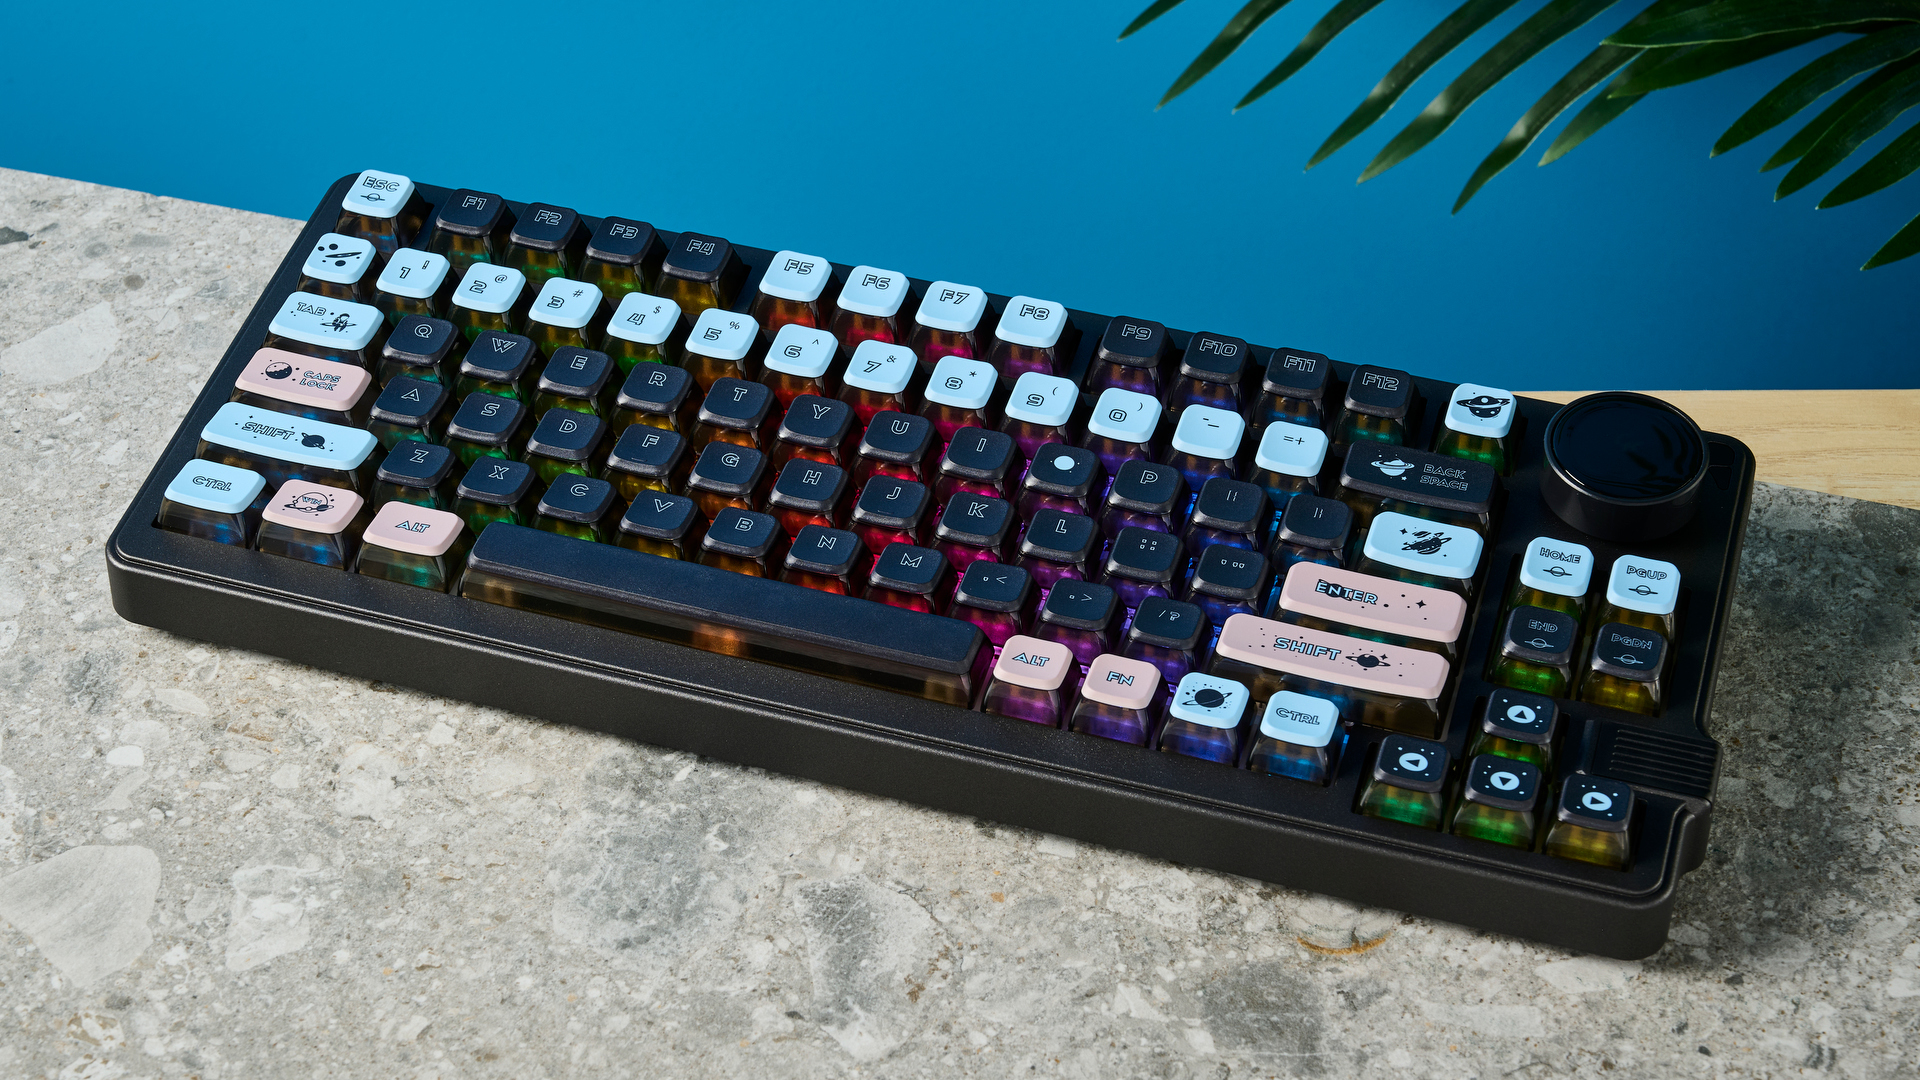 A space-themed Gamakay LK75 wireless mechanical keyboard